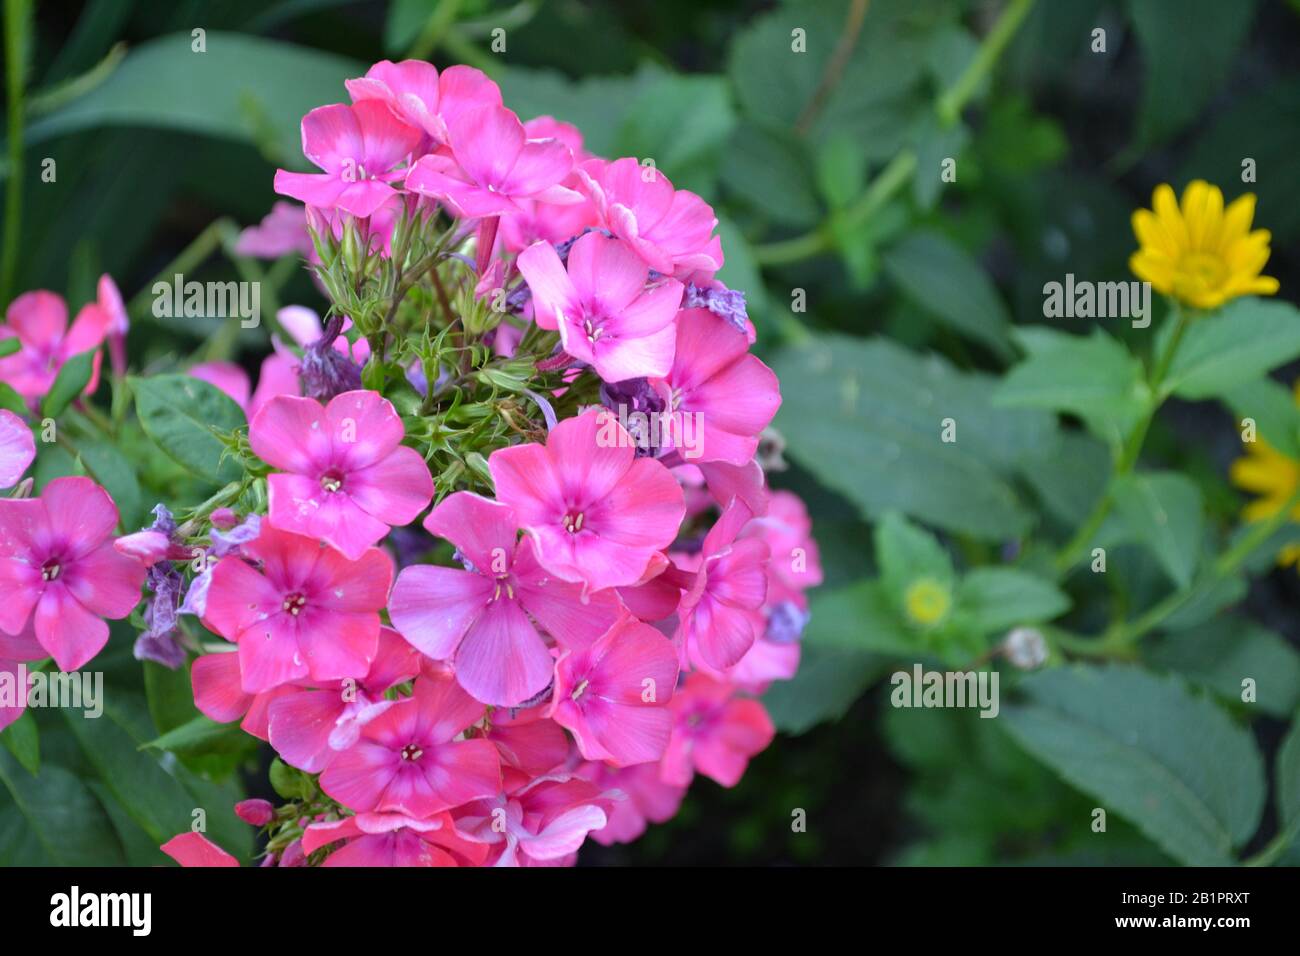 Phlox. Polemoniaceae. Growing flowers. Flowerbed. Garden. Floriculture. Pink summery. Beautiful flowers. Green leaves. High bushes. Summer. Horizontal Stock Photo